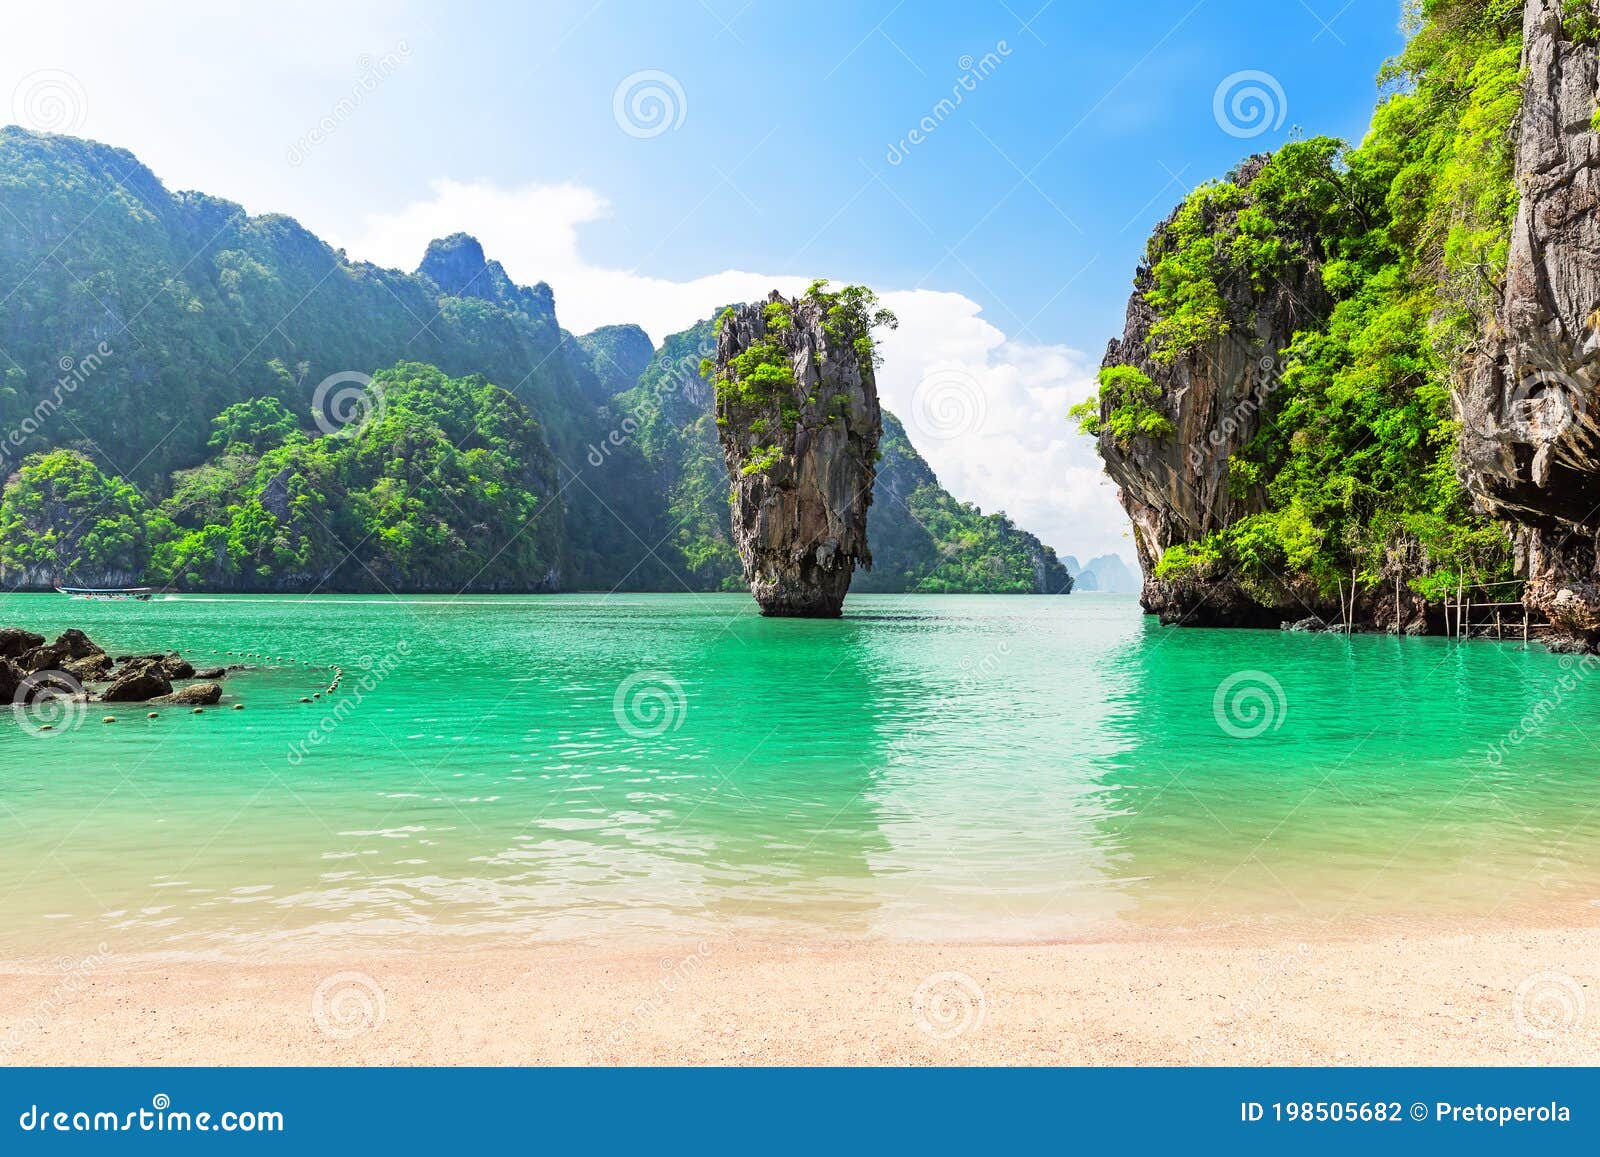 Travel Photo Of James Bond Island In Phang Nga Bay Thailand Stock Photo Image Of Famous Getaway